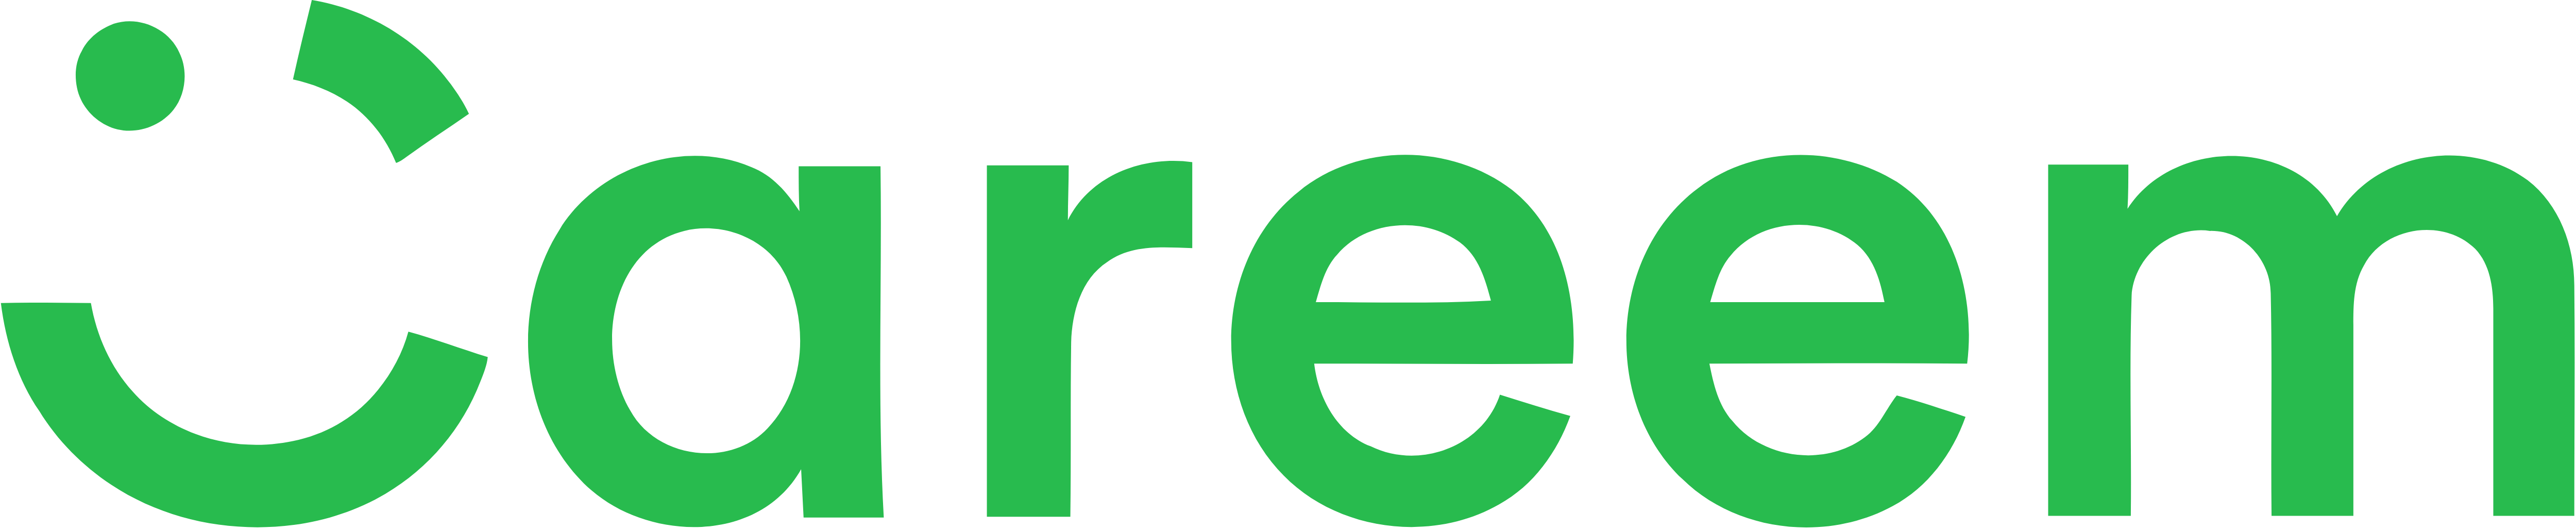 Careem_logo_green